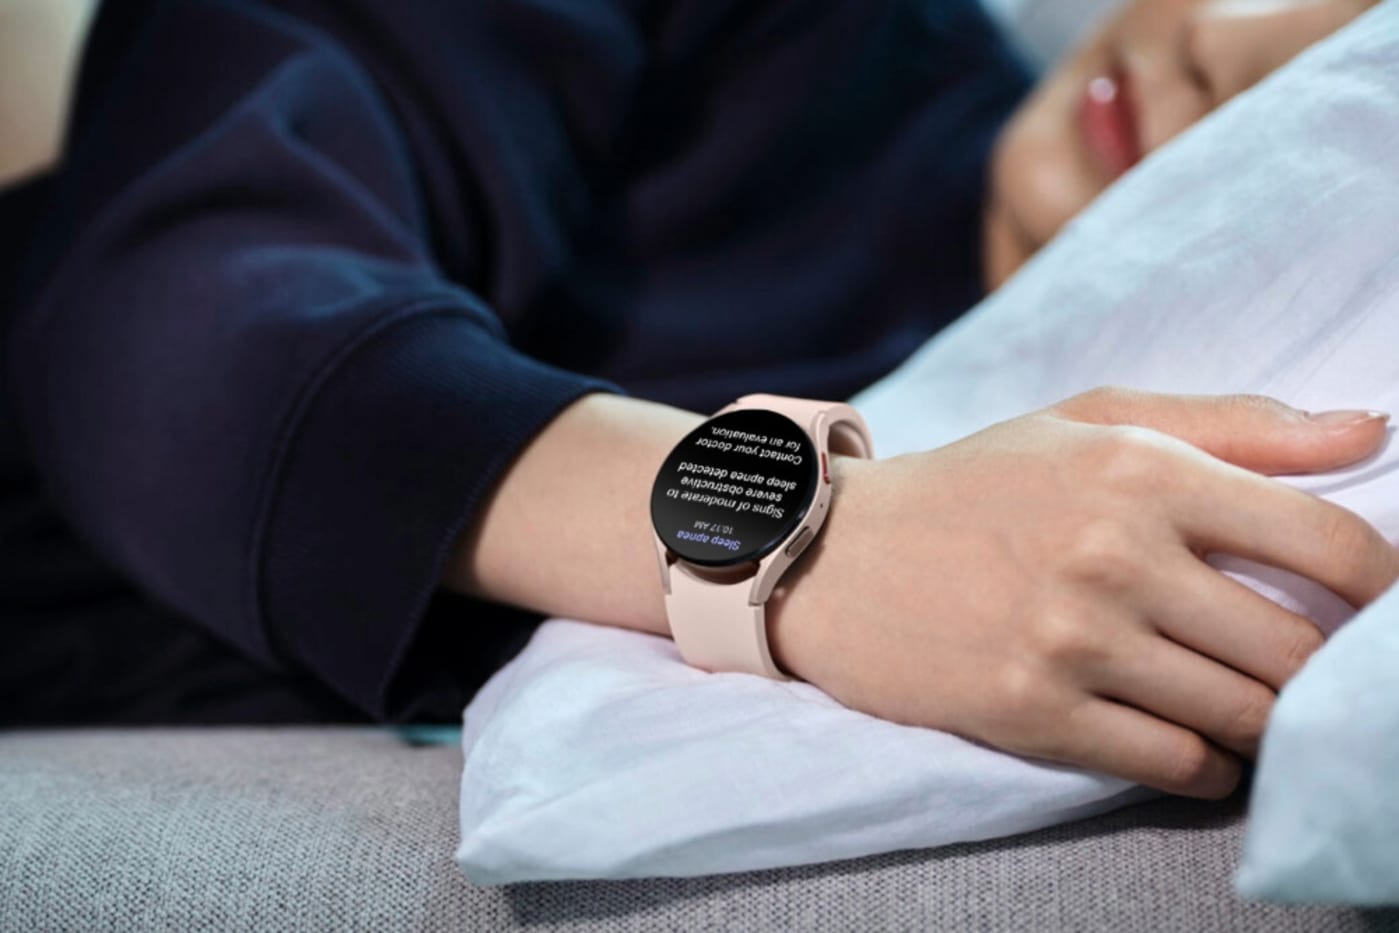 Samsung gets FDA approval for a sleep apnea feature on Galaxy Watch